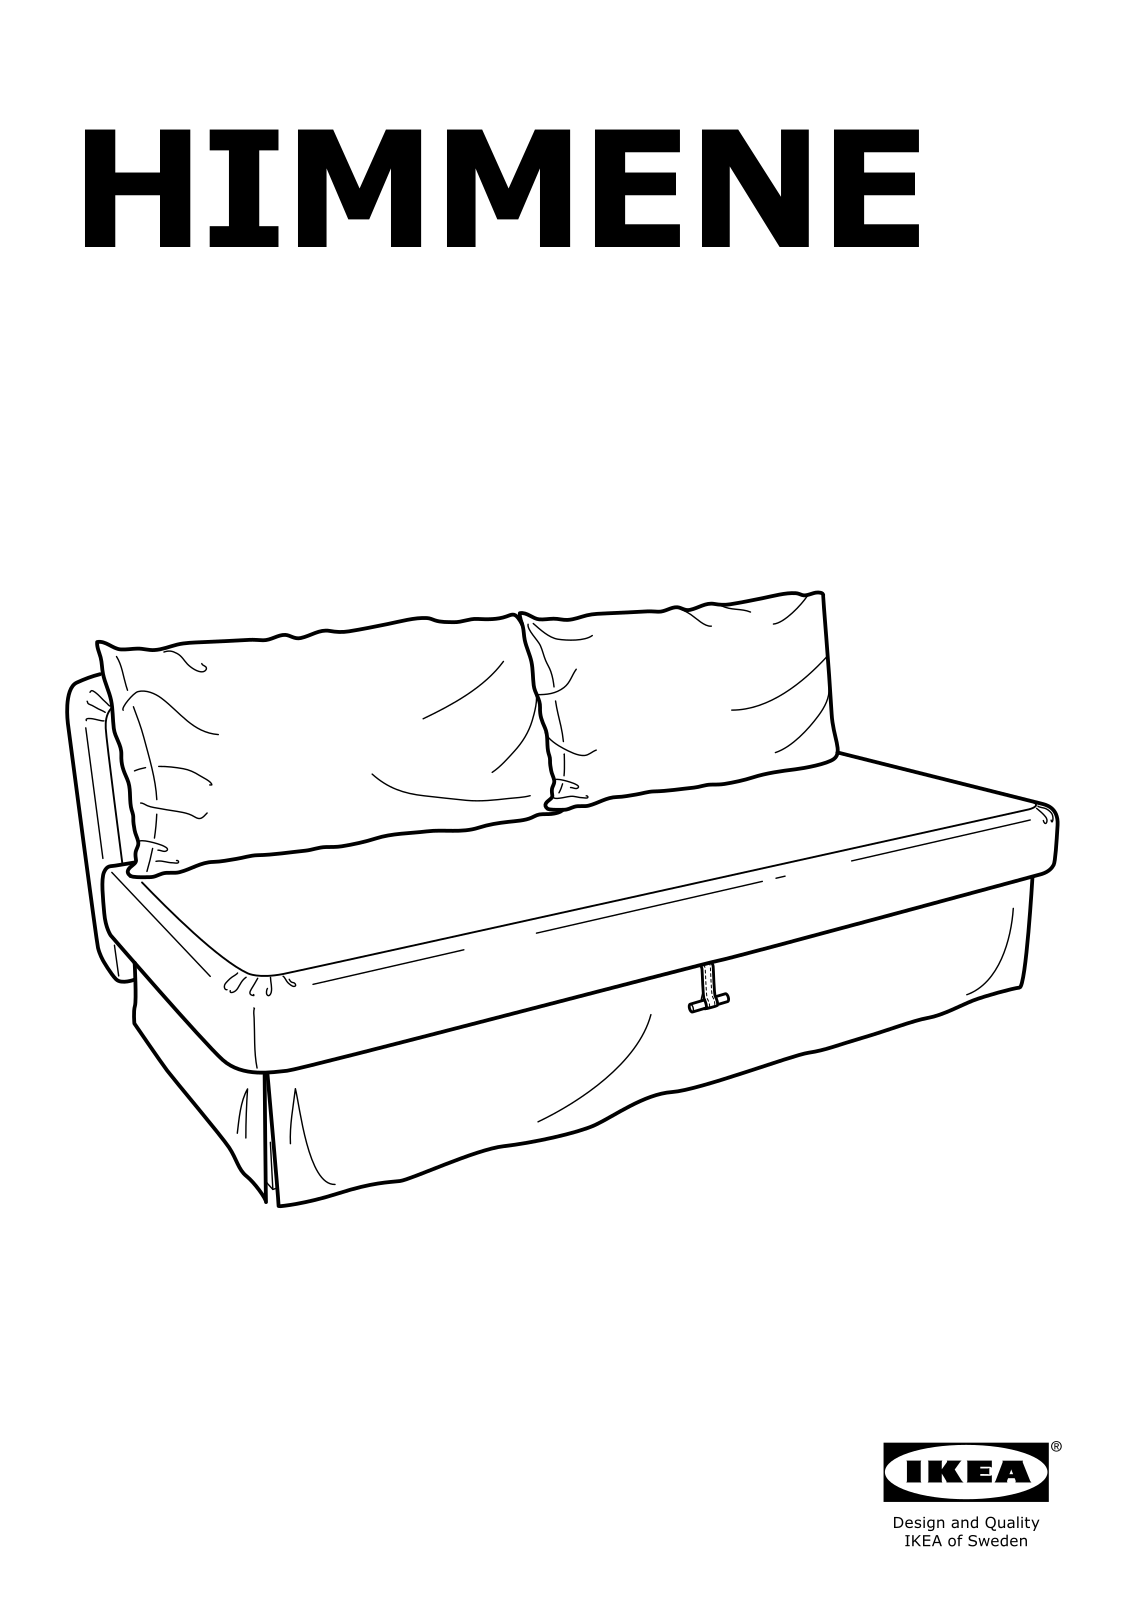 IKEA HIMMENE User Manual